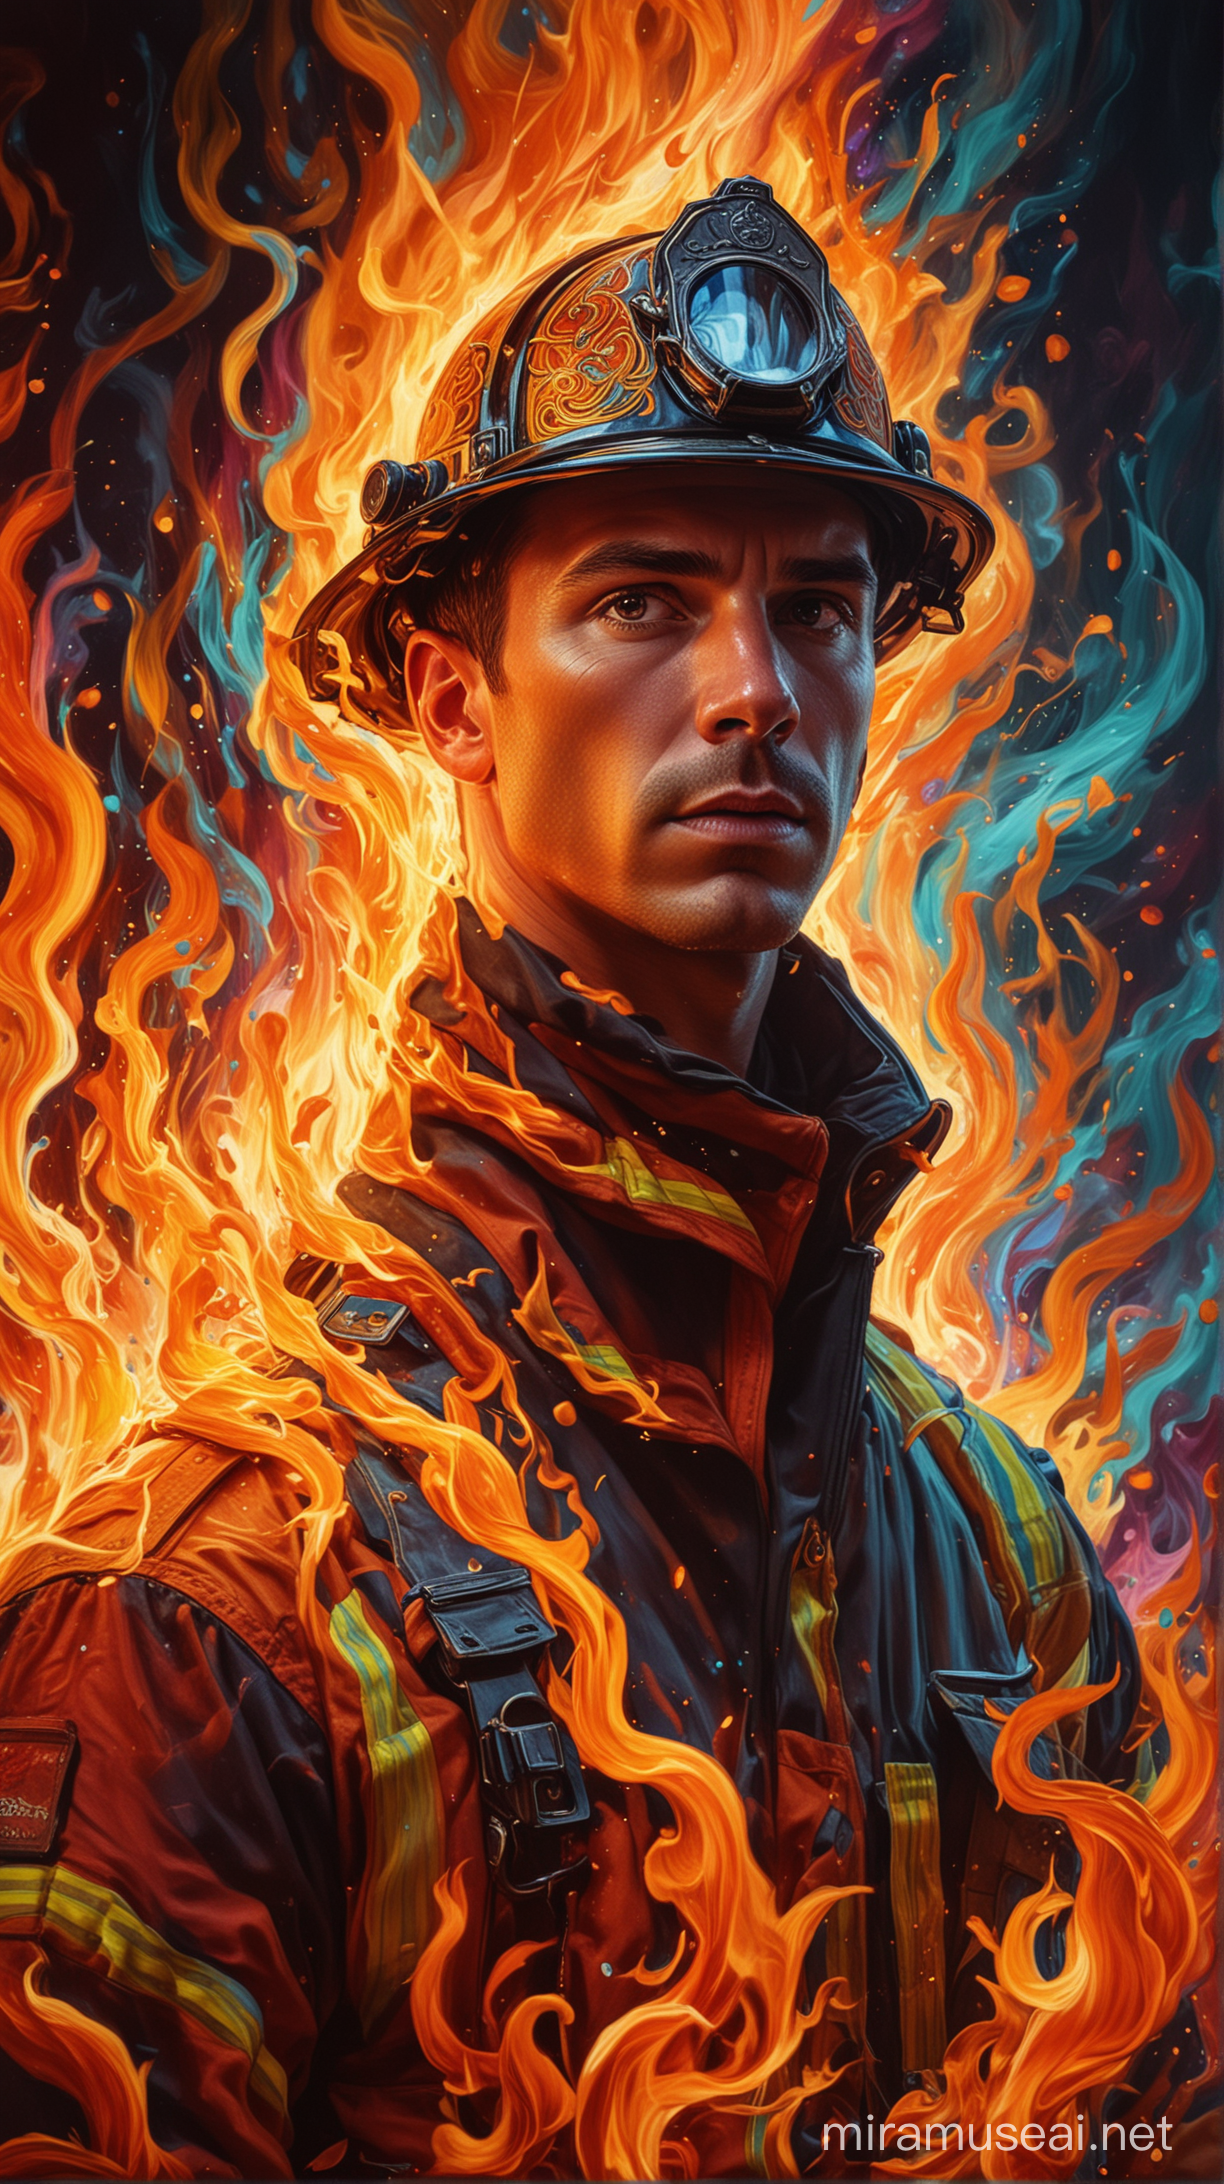 Psychedelic Fireman Portrait Brave Determination Amidst Swirling Flames